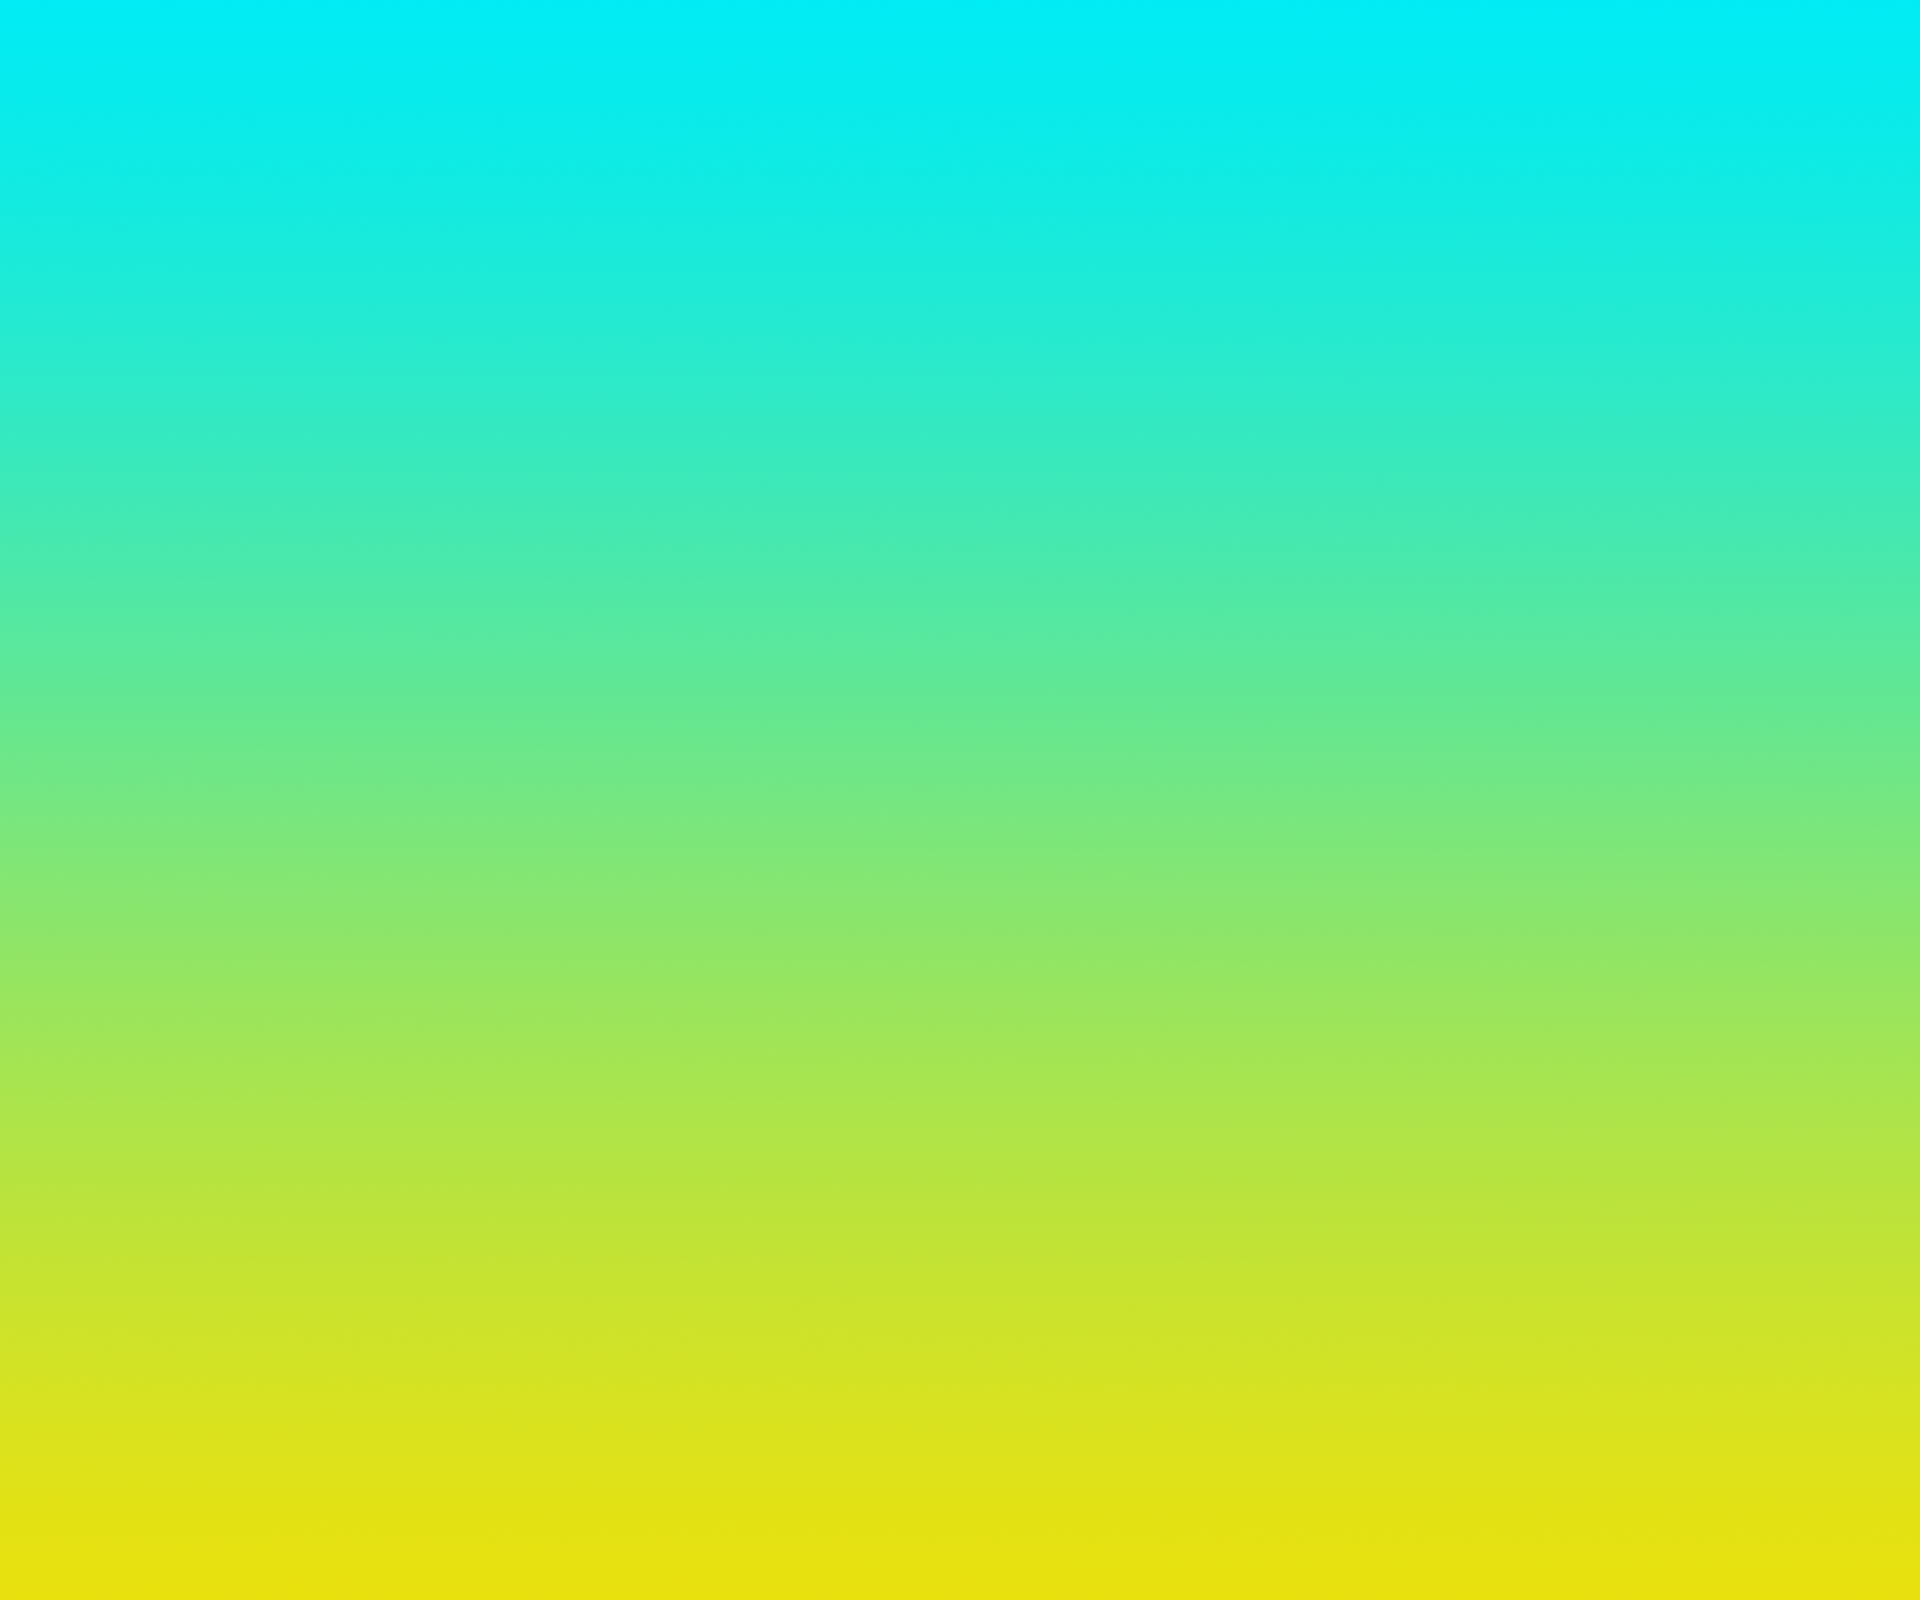 Cyan Yellow Gradient Minimal Desktop Wallpaper Uploaded By 10mantra